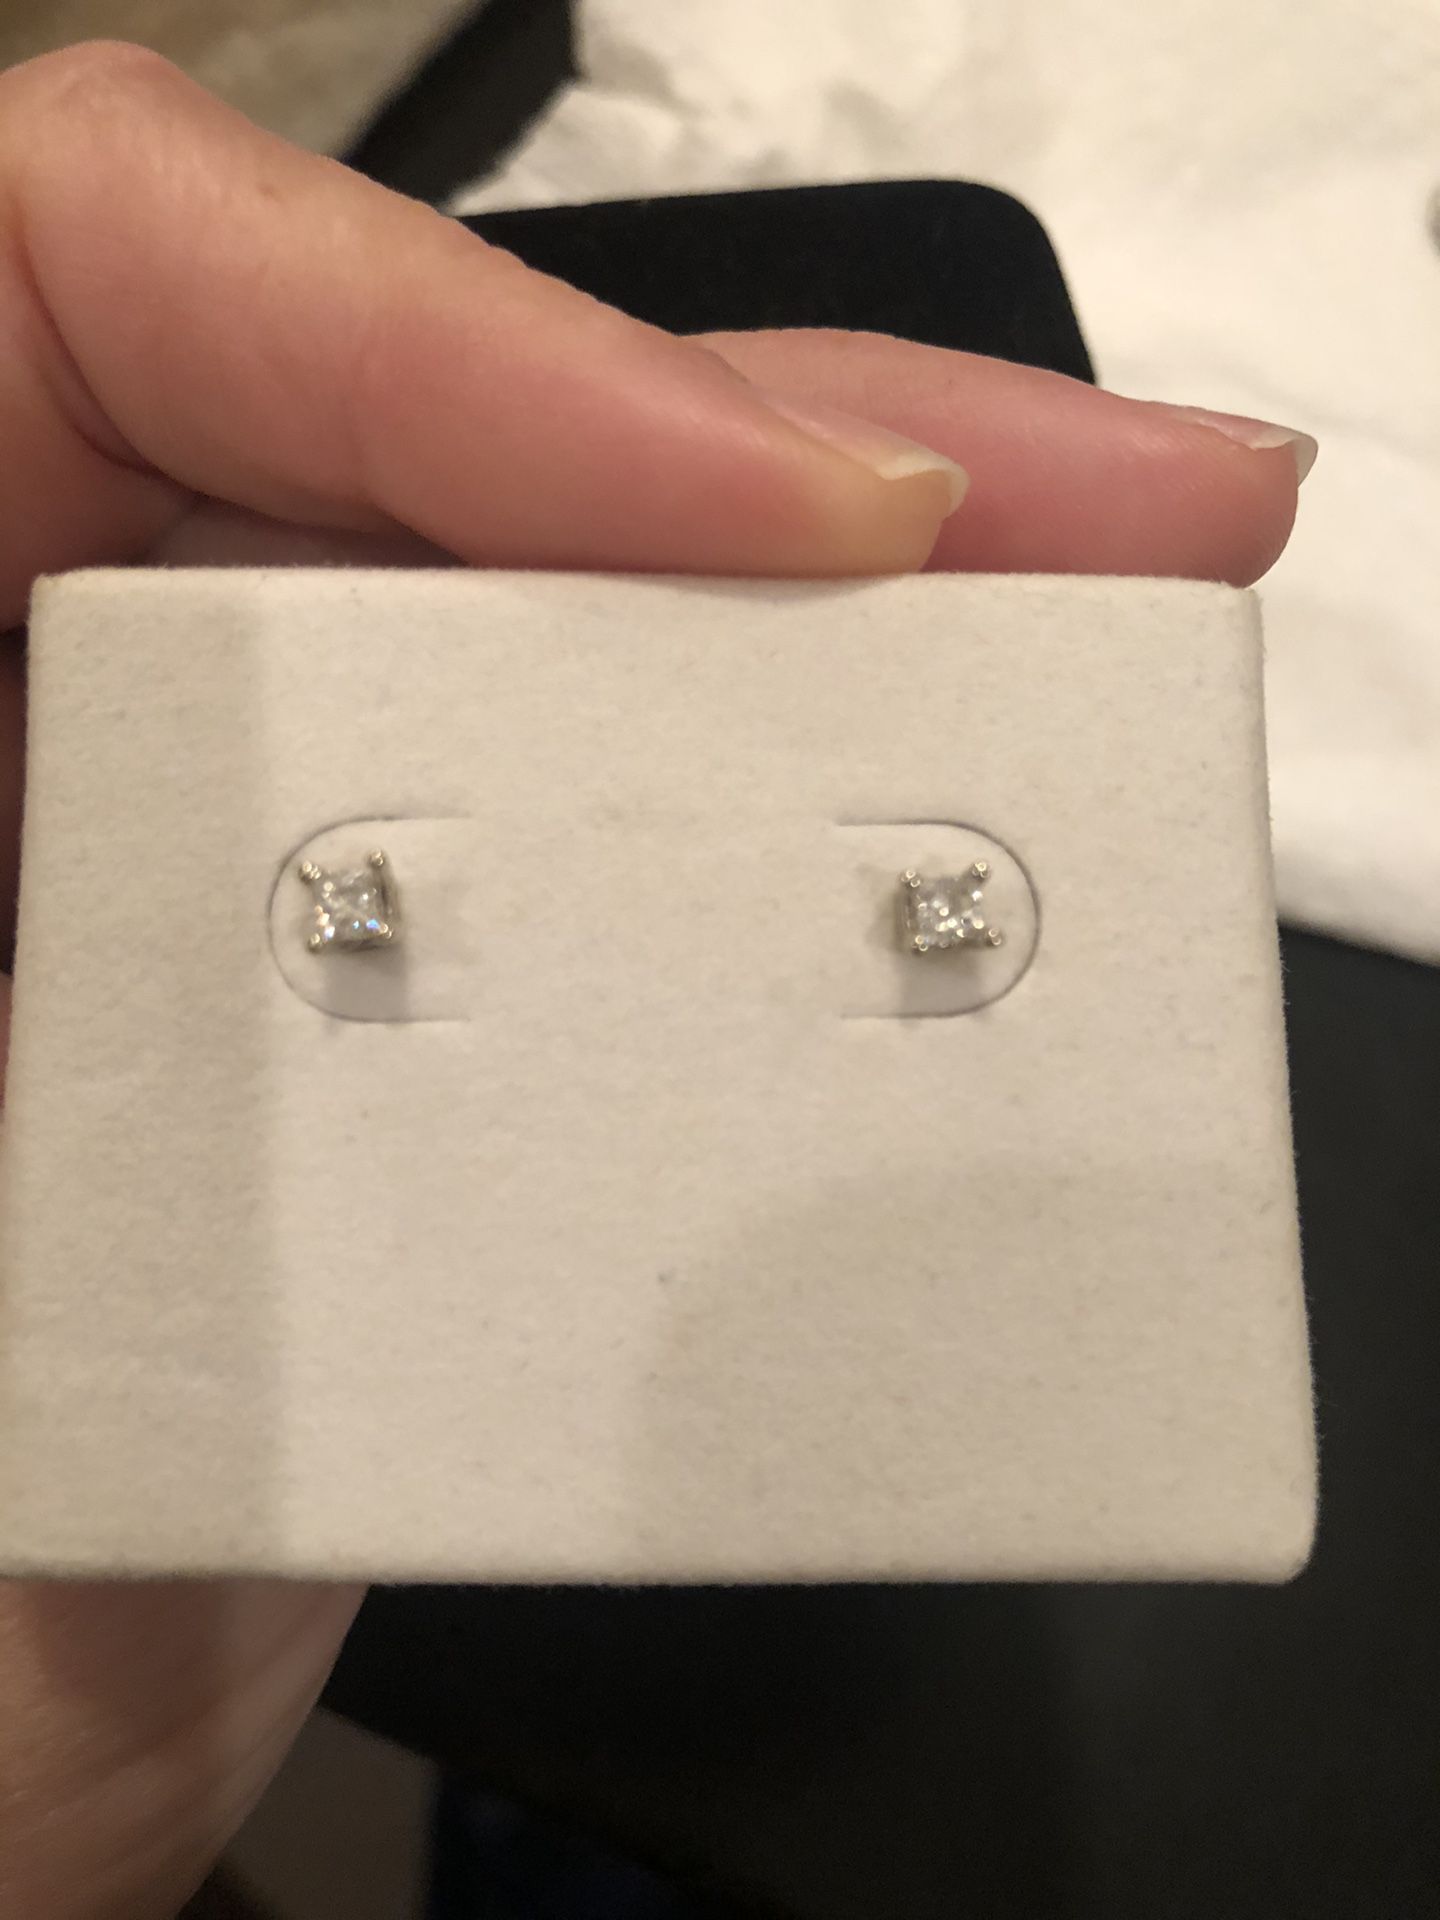 1/4 carat TW princess cut diamond stud earrings in 14K white gold